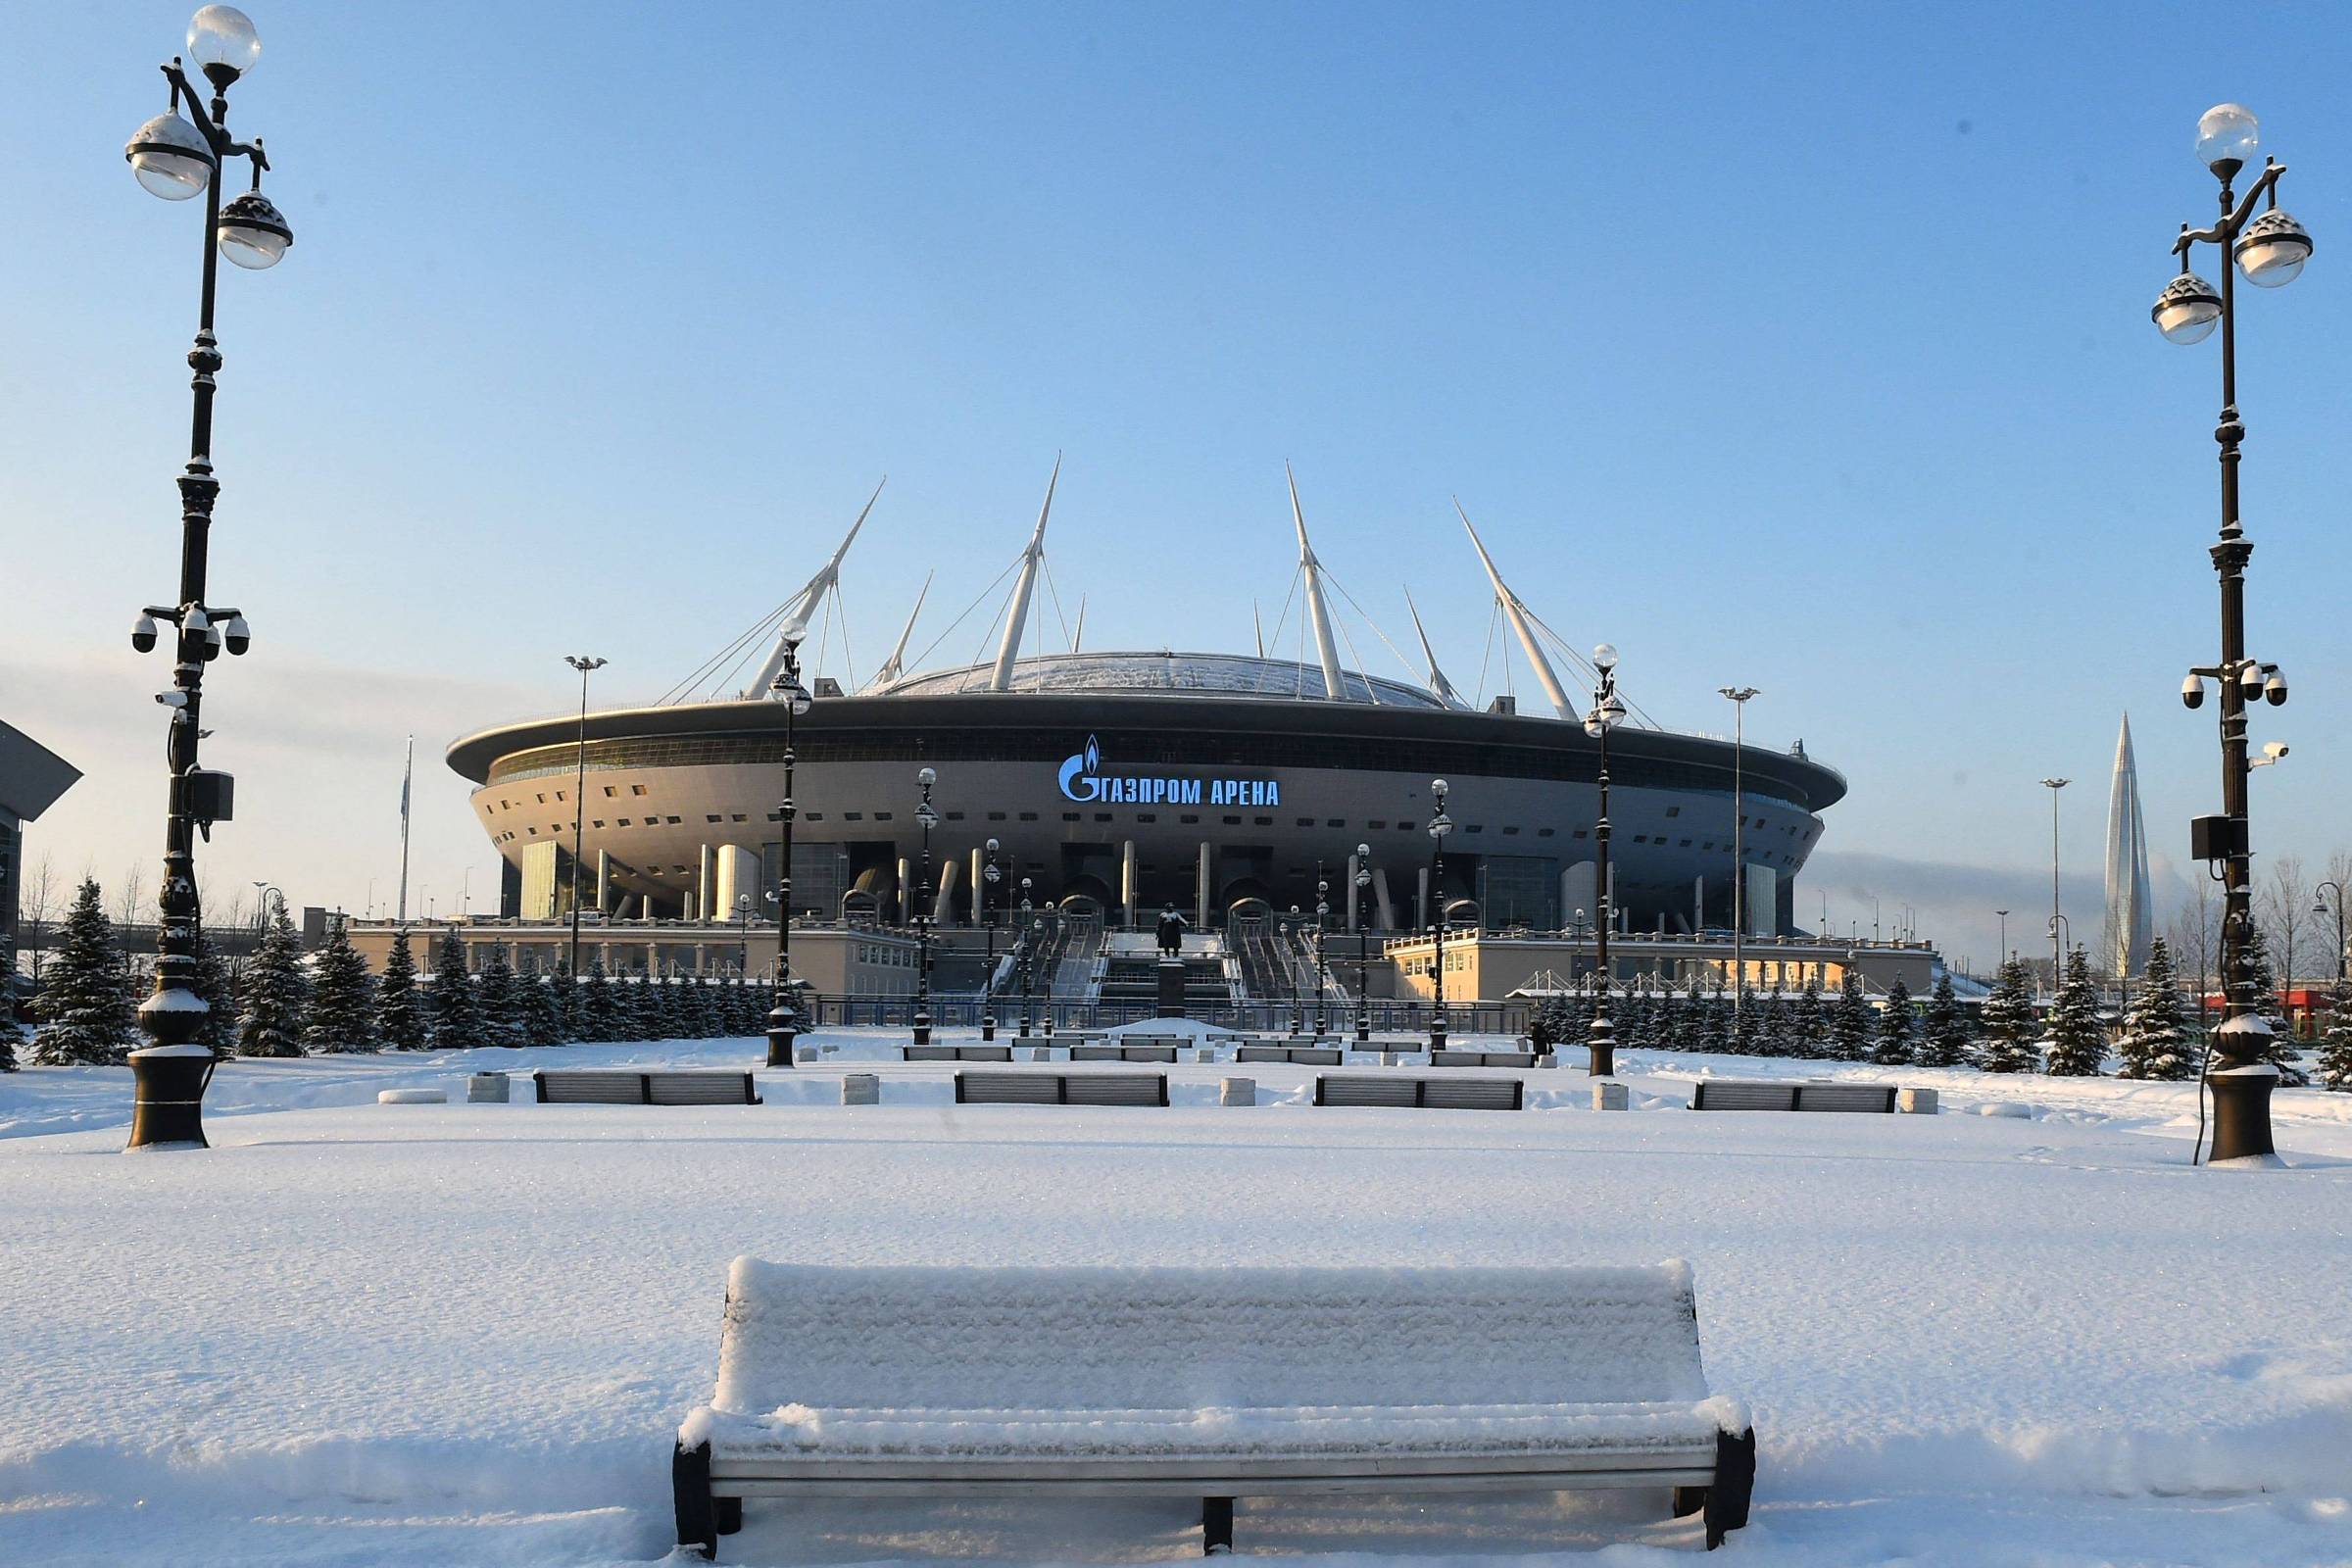 UEFA exclui Spartak Moscou da Liga Europa e clube russo se